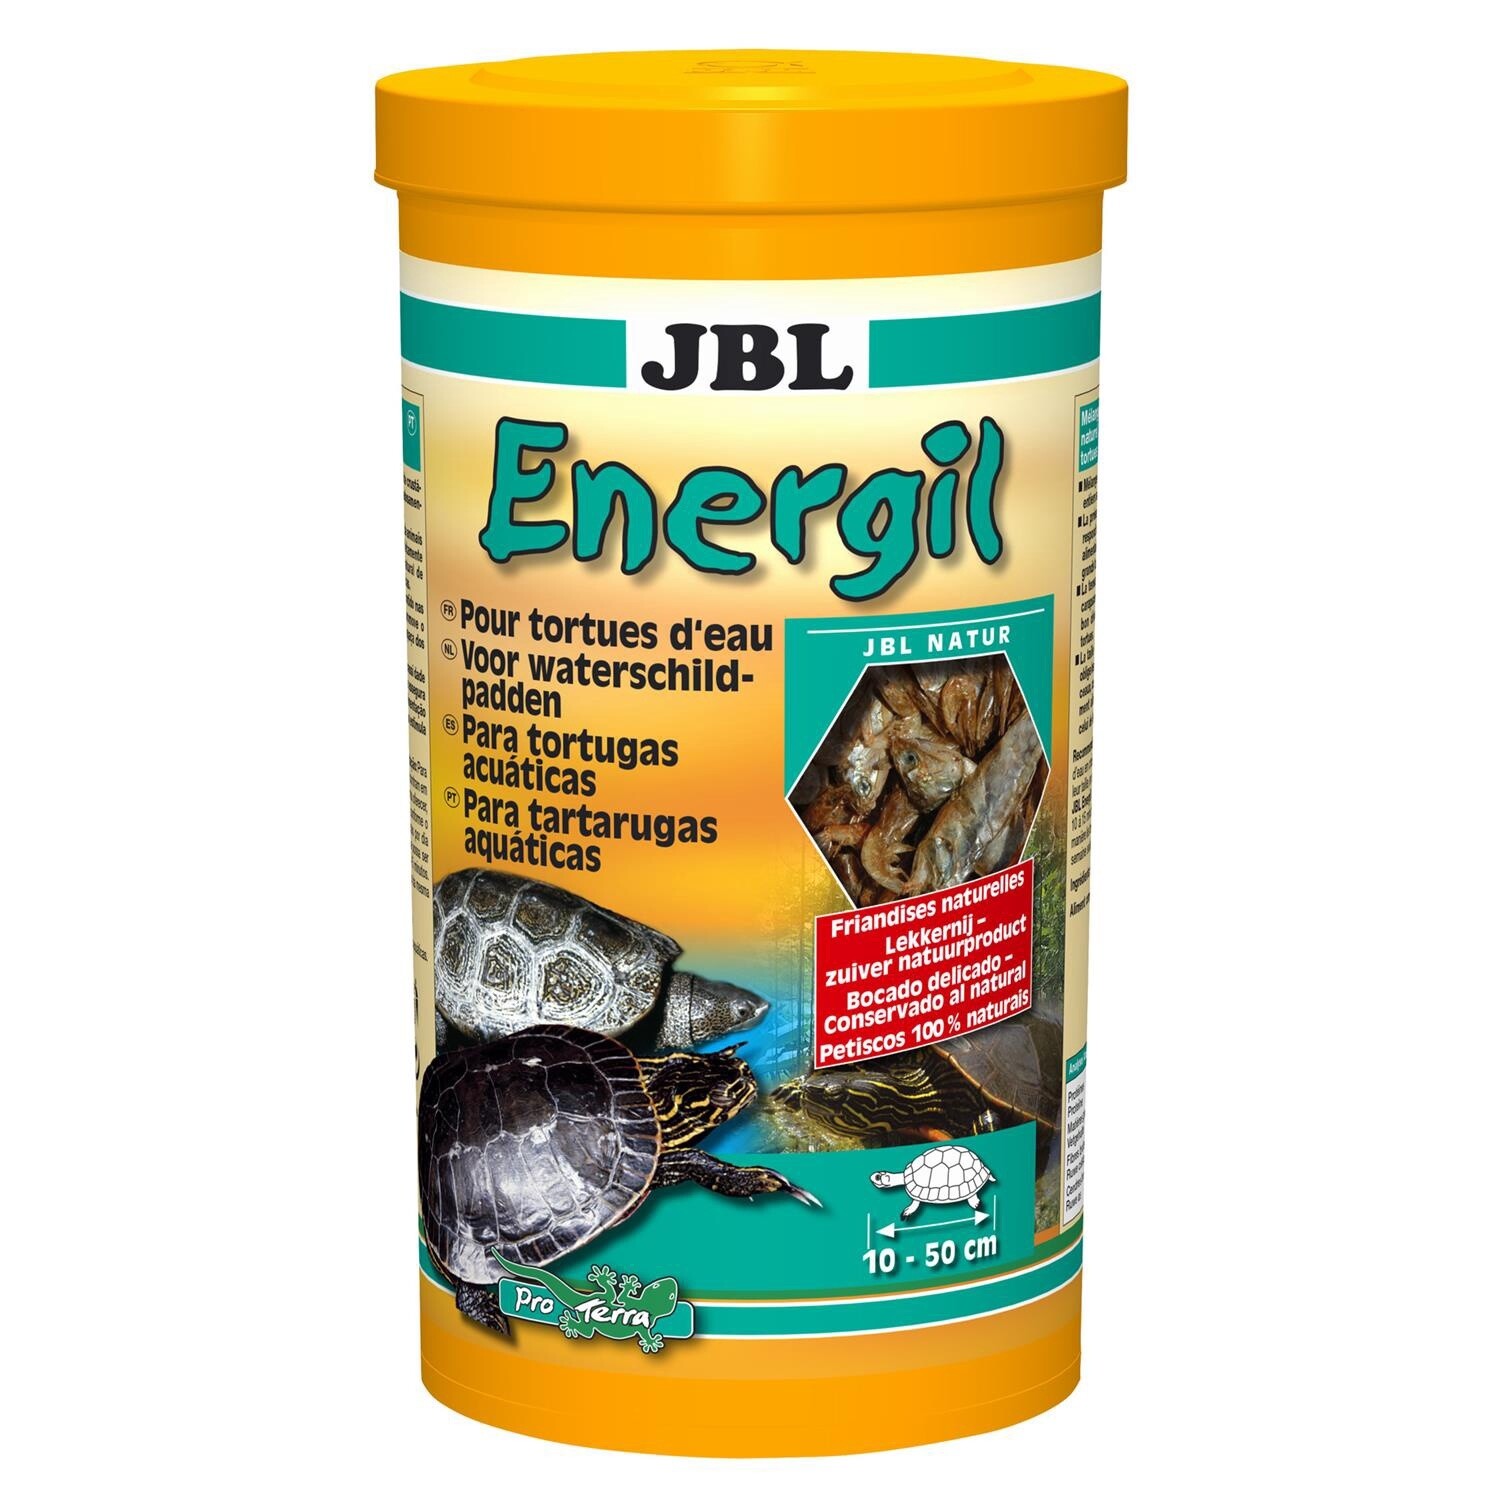 JBL Energil - Lekkernij Voor Waterschildpadden - 1000 ml